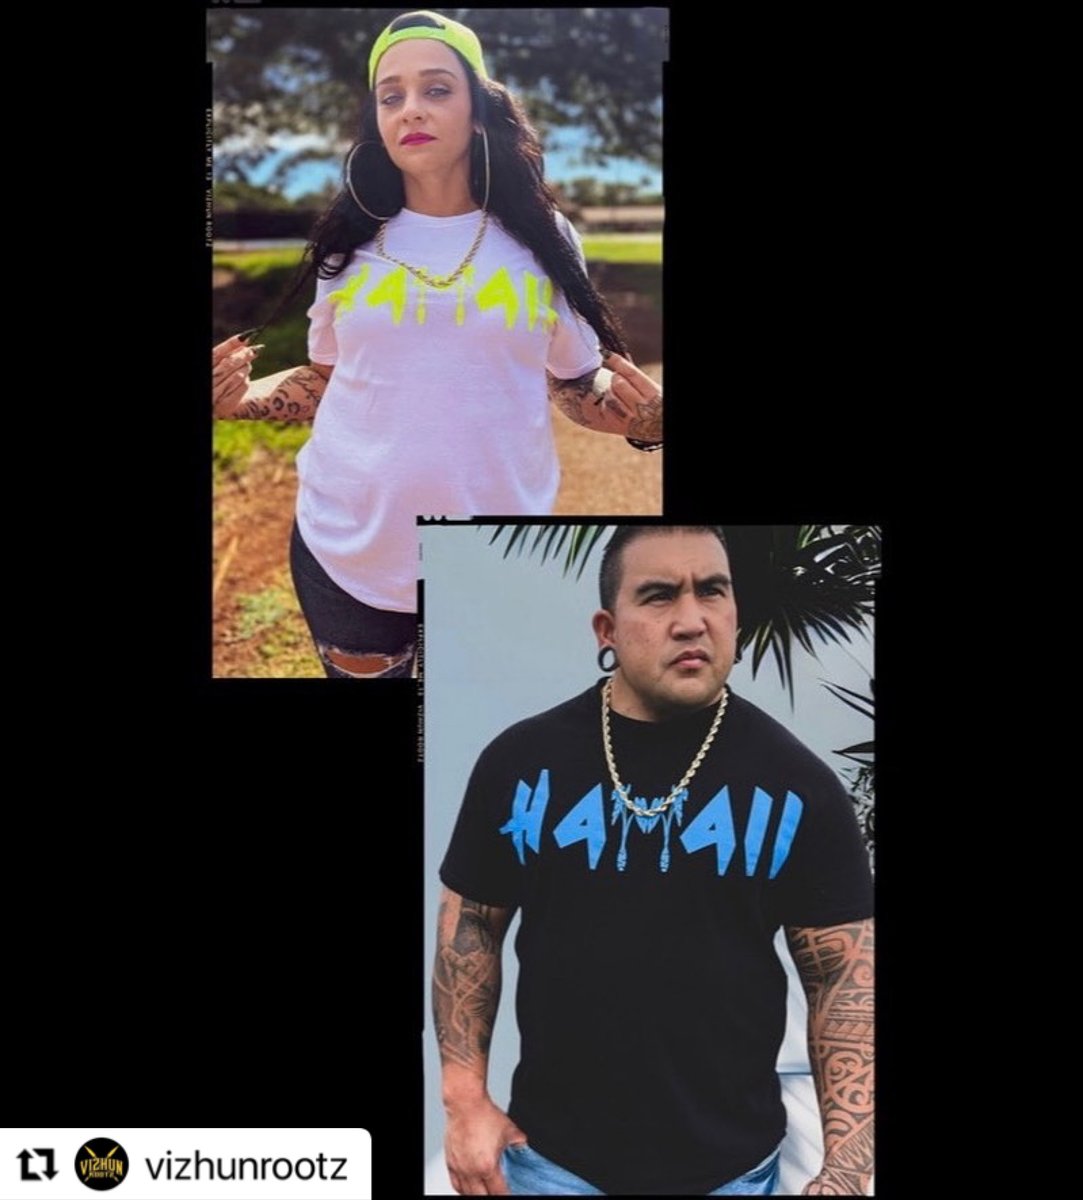 Represent! #Repost @vizhunrootz: 𝑨𝑳𝑾𝑨𝒀𝑺 𝑹𝑬𝑷𝑷𝑰𝑵…🔥
.
.
𝑺𝒉𝒐𝒑 > 𝒗𝒊𝒛𝒉𝒖𝒏𝒓𝒐𝒐𝒕𝒛.𝒃𝒊𝒈𝒄𝒂𝒓𝒕𝒆𝒍.𝒄𝒐𝒎
.
.
.
#locals#hawaii#hawaiian#supporthawaiibusinesses#shopsmall#tshirtswag#wearitproudly#art#tshirtdesign#myvibe#swag#love#clothingbrands#apparelline